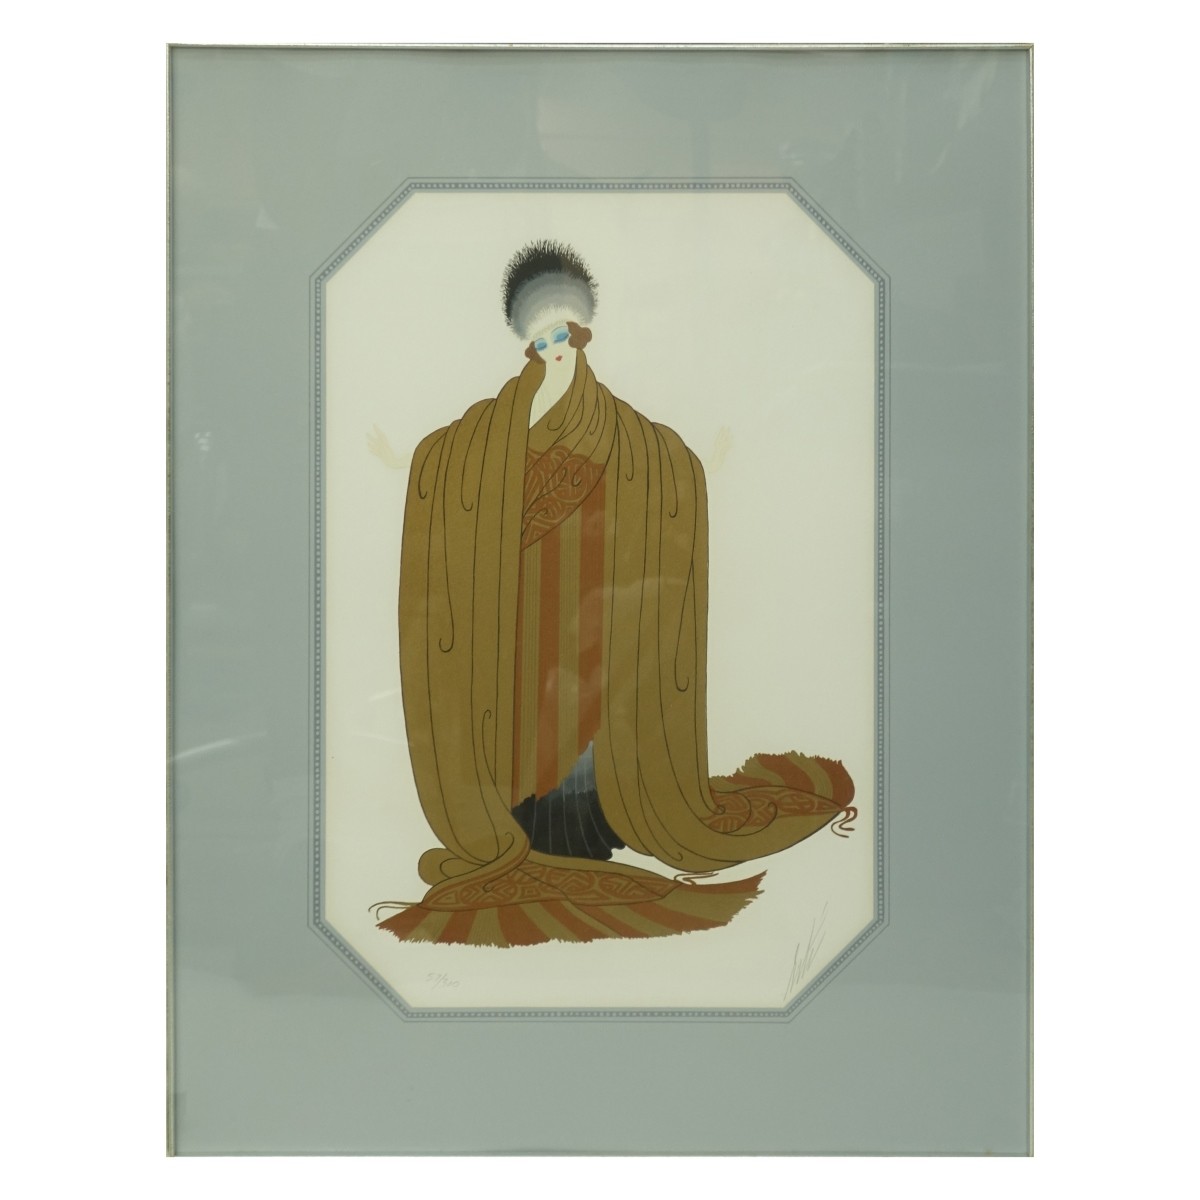 Erte (1892 - 1989) "Kings Favorite" Lithograph